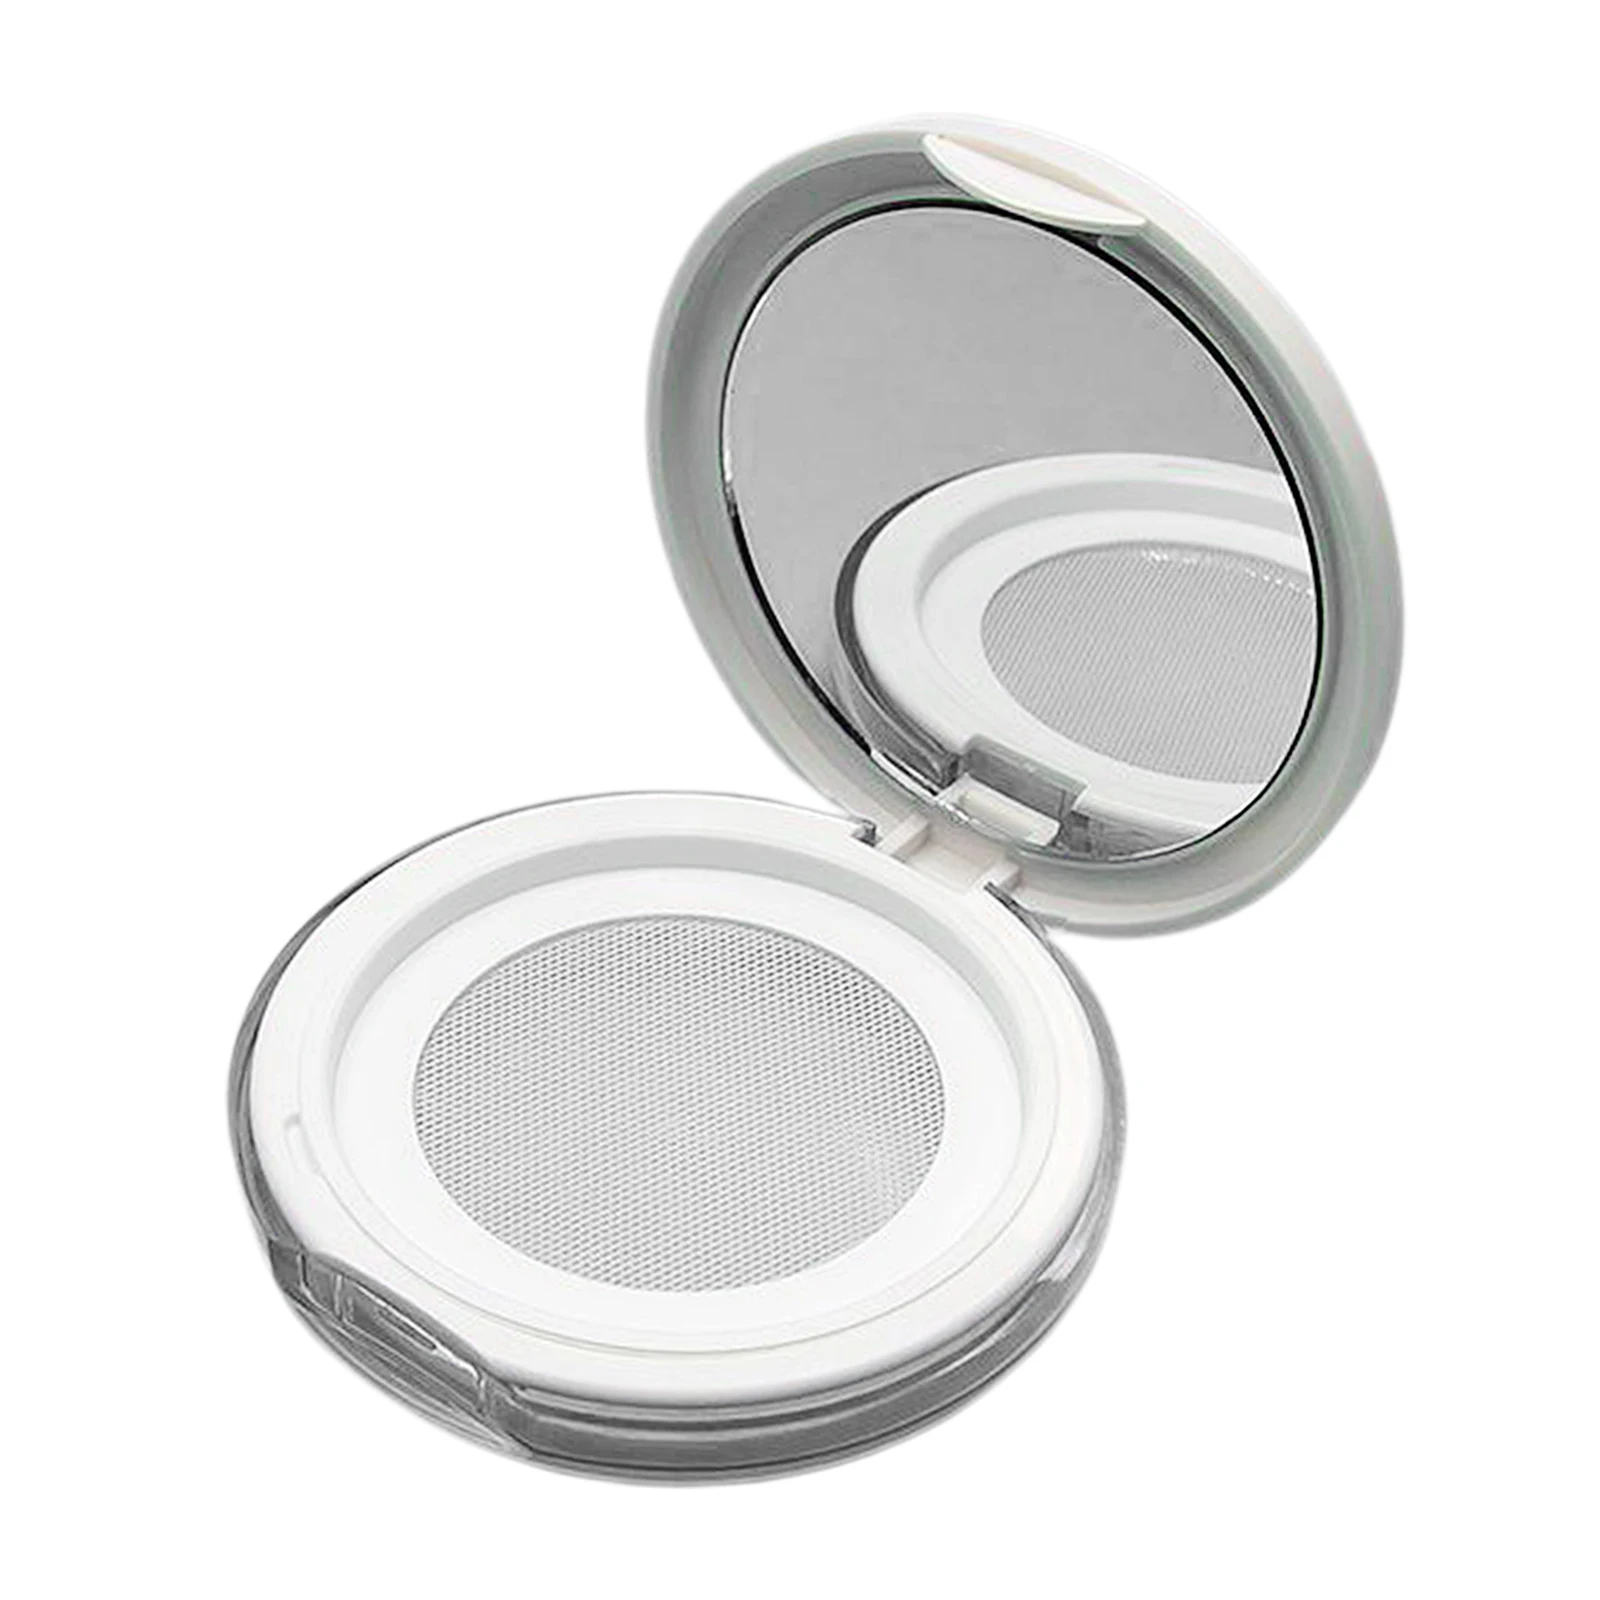 3 ml 0.1 oz Reusable Loose Powder Container Makeup Powder Case with Mirror